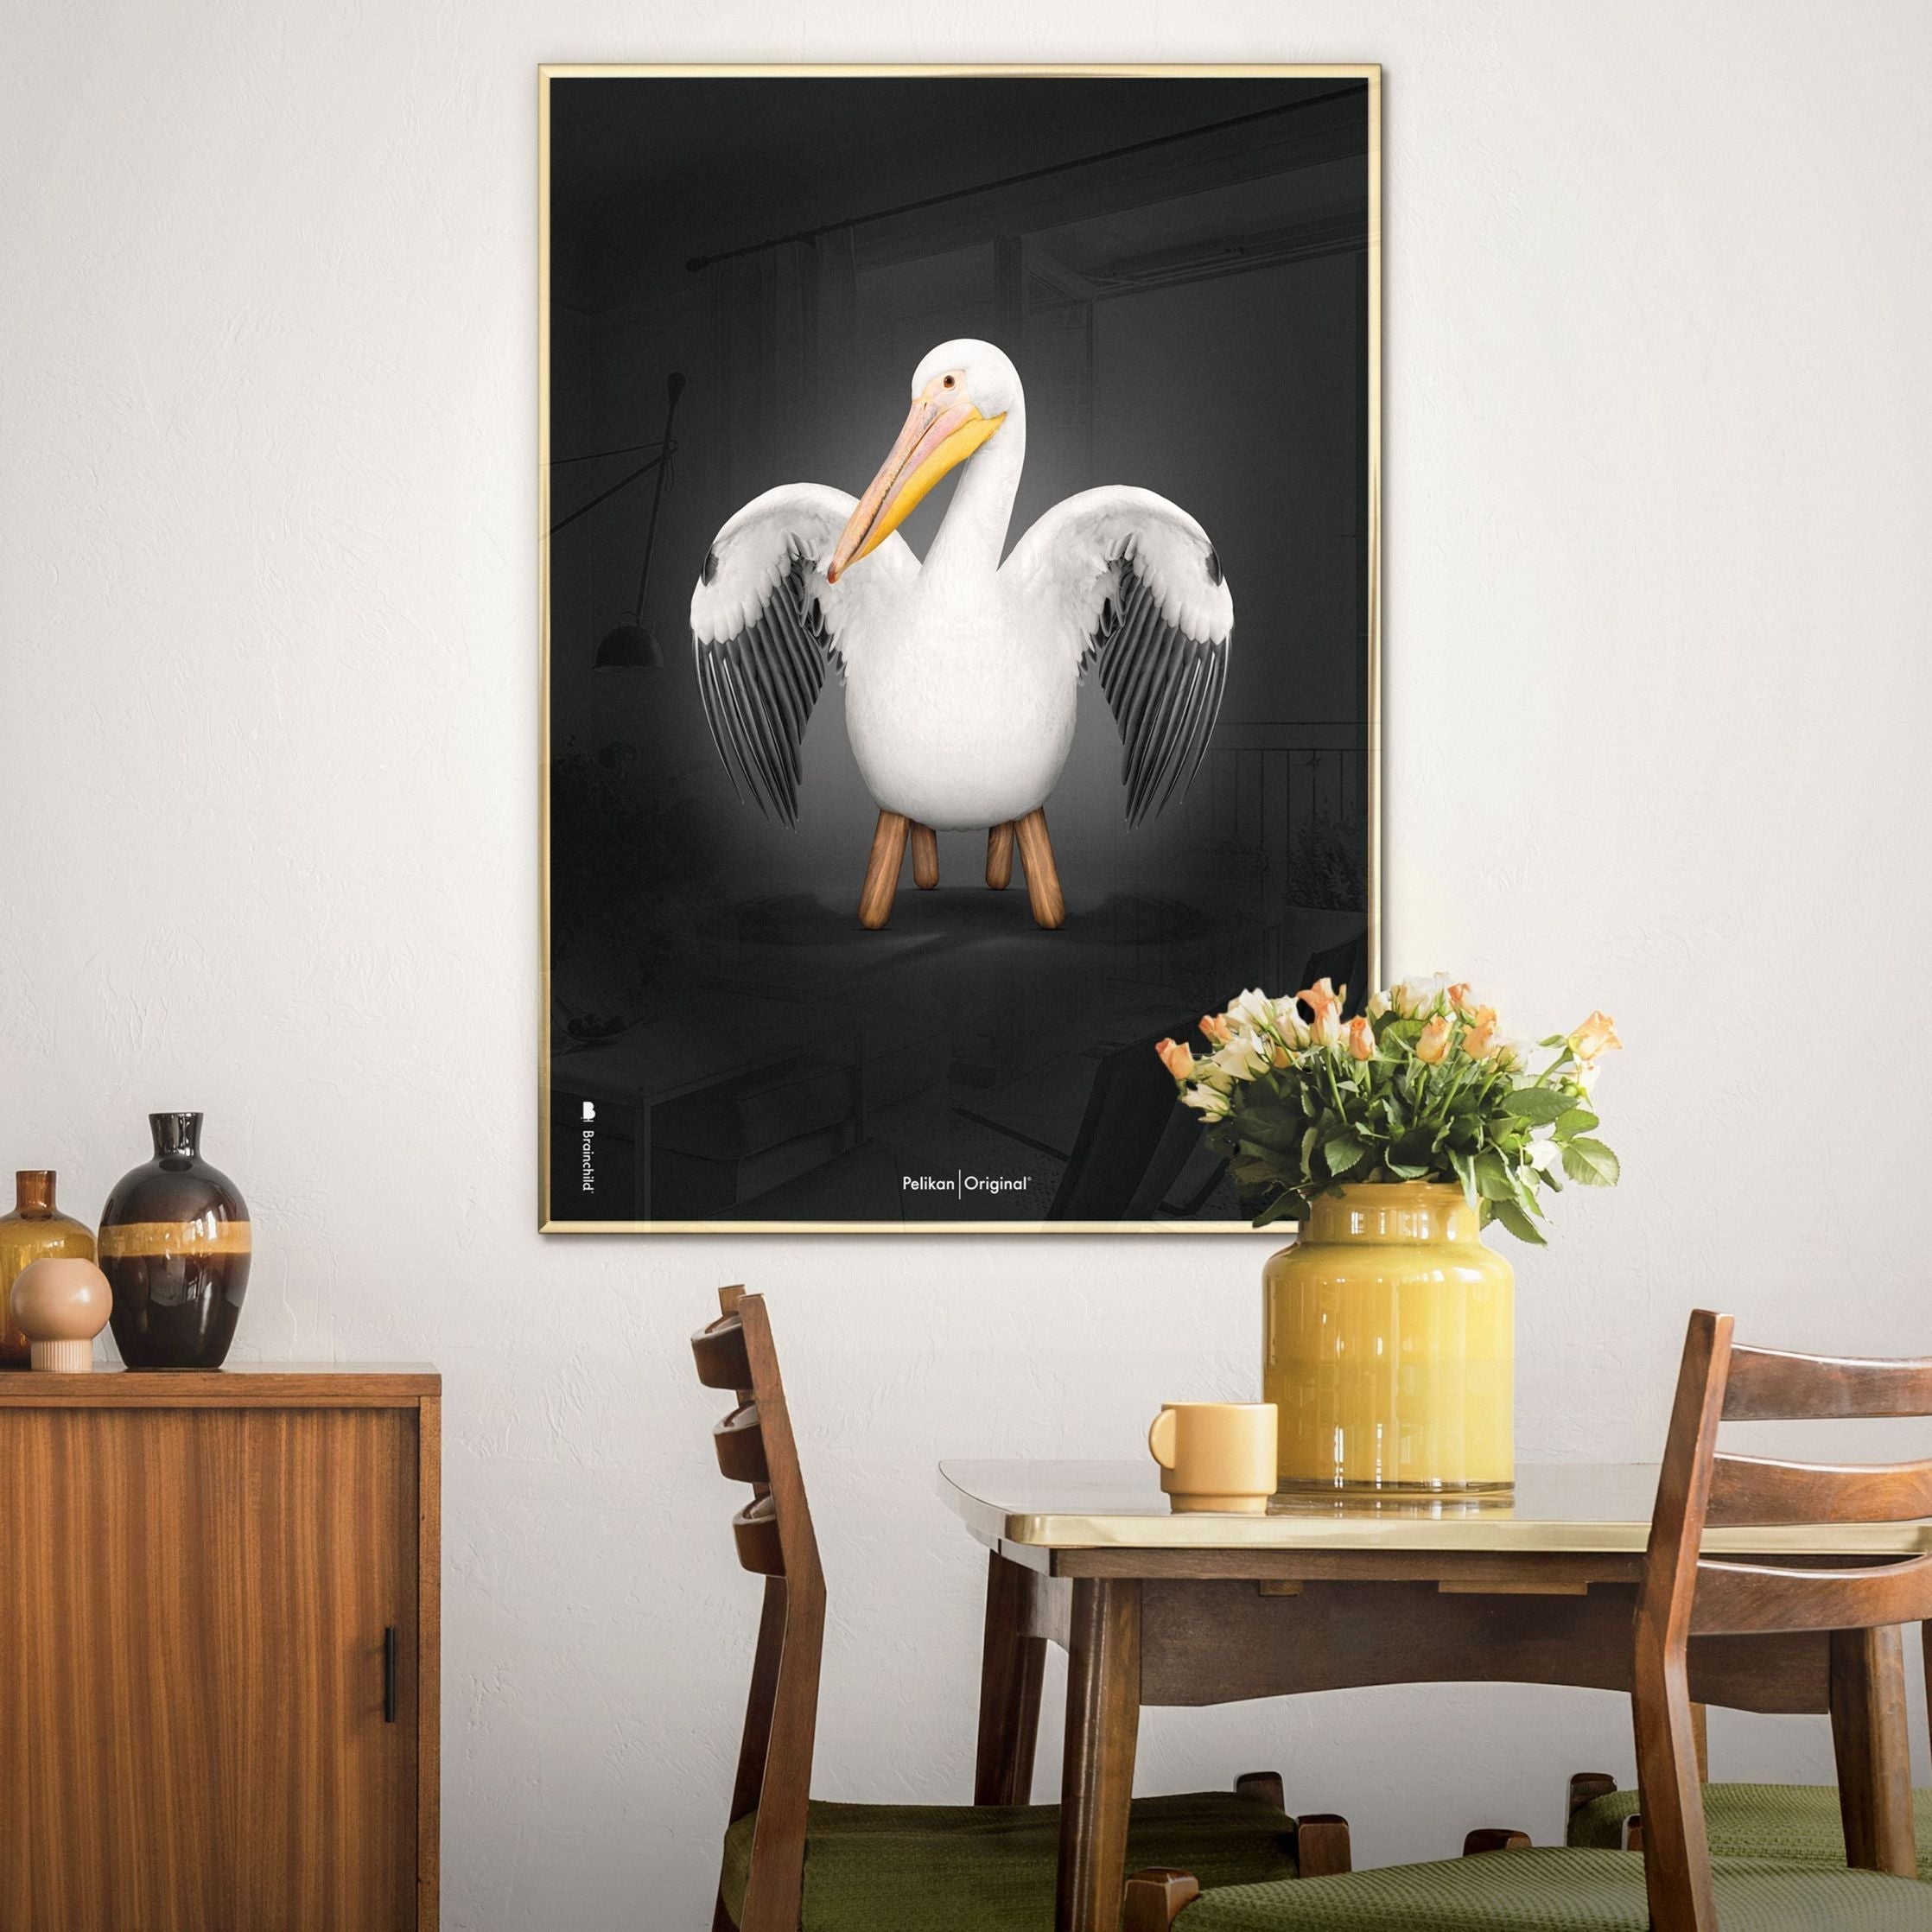 Brainchild Pelikan Classic Poster, Light Wood Frame A5, Black Background